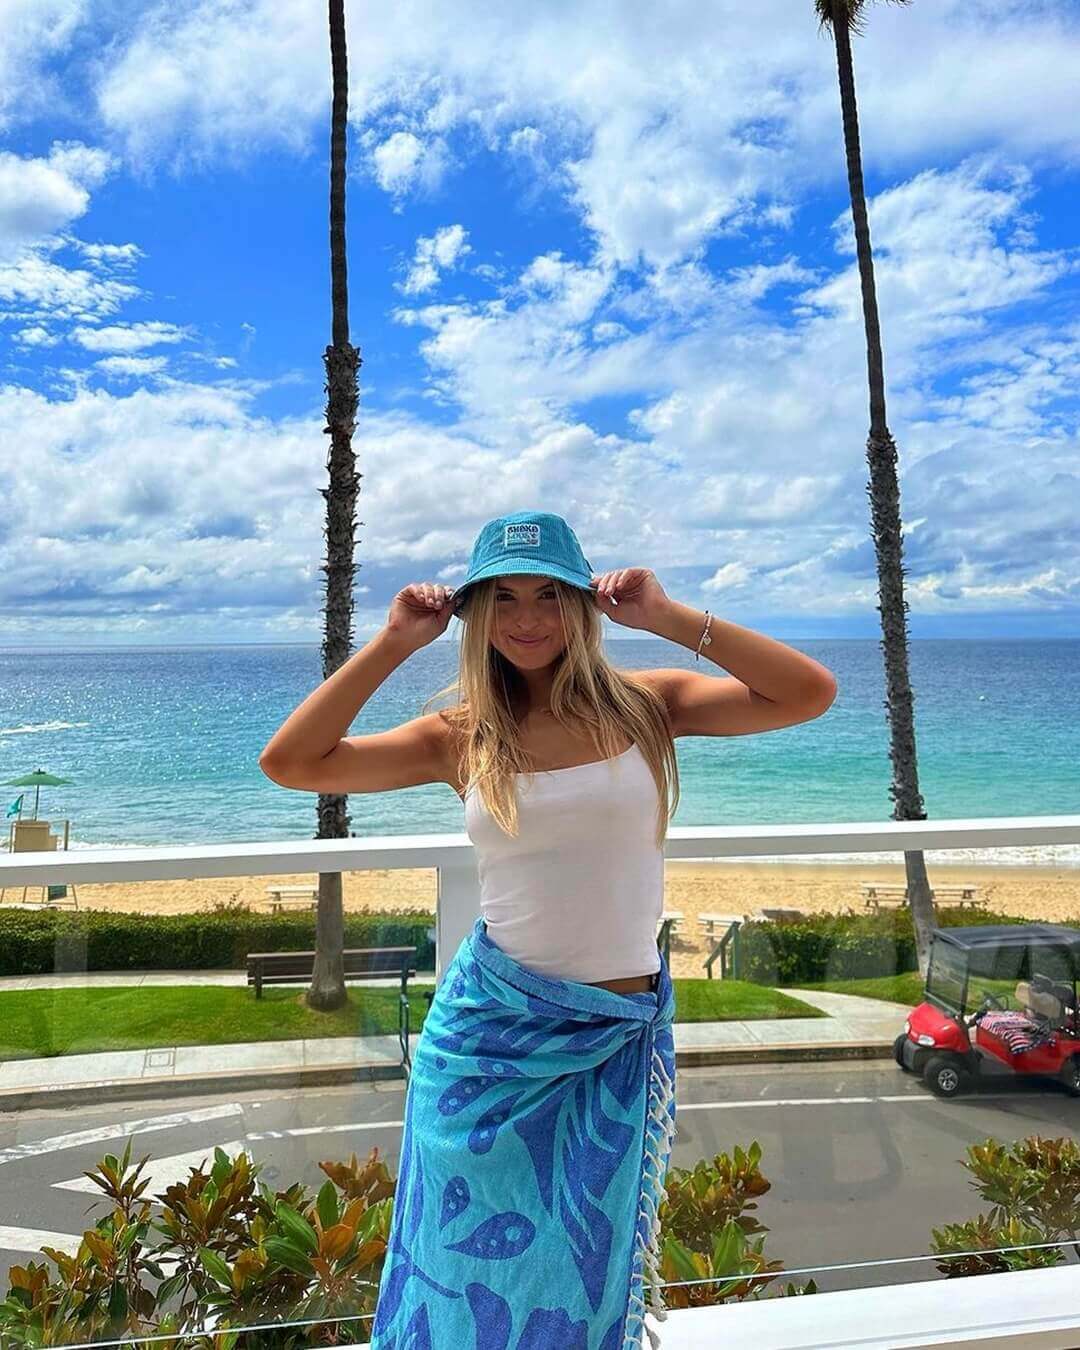 the pretty Katherine Vonderahe wearing Shaka Love sustainable hat for sun protection and enjoying summer